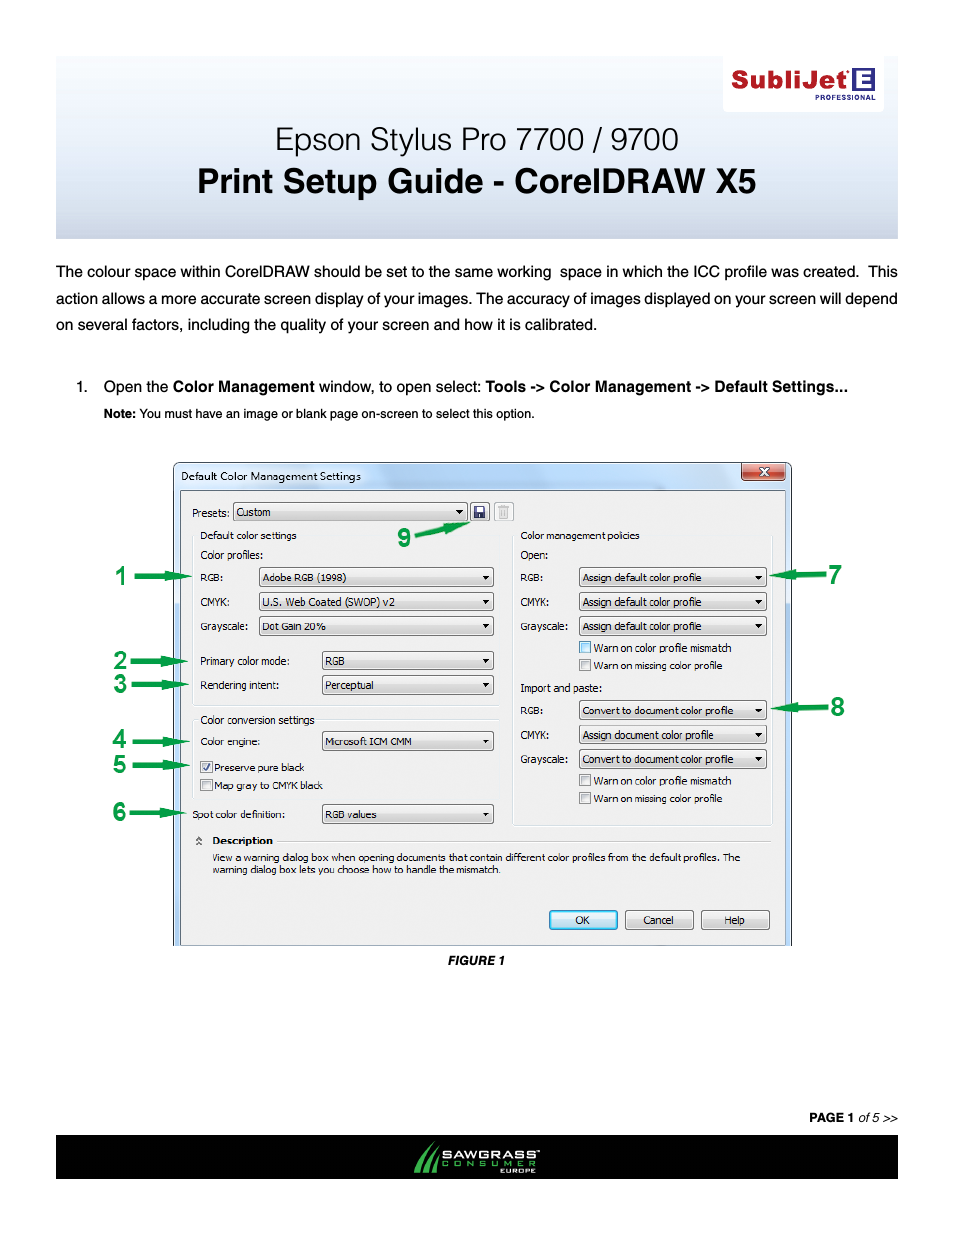 SubliJet E Epson Stylus Pro 7700 (Windows ICC Profile Setup): Print & Setup Guide CorelDRAW X5